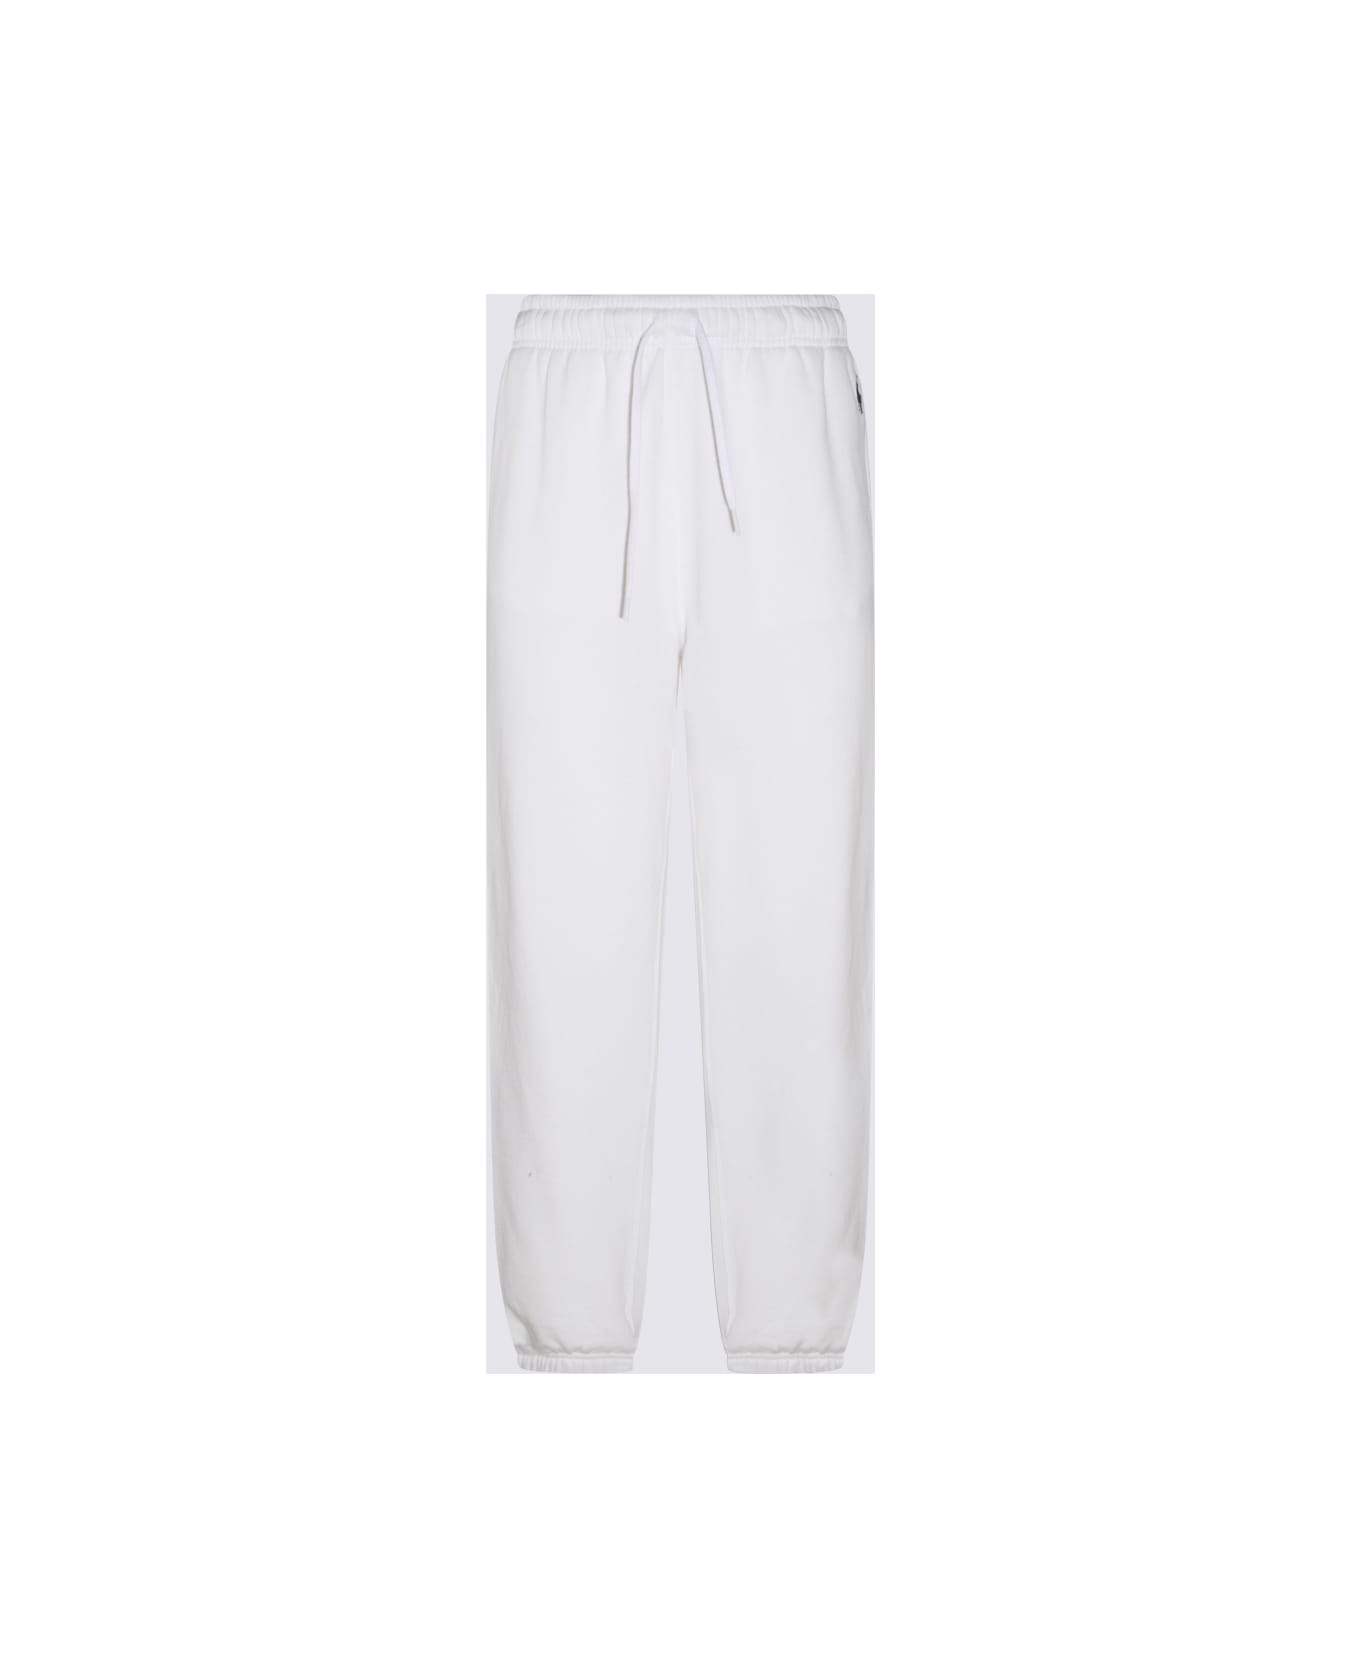 Polo Ralph Lauren White And Blue Cotton Blend Track Pants - White スウェットパンツ